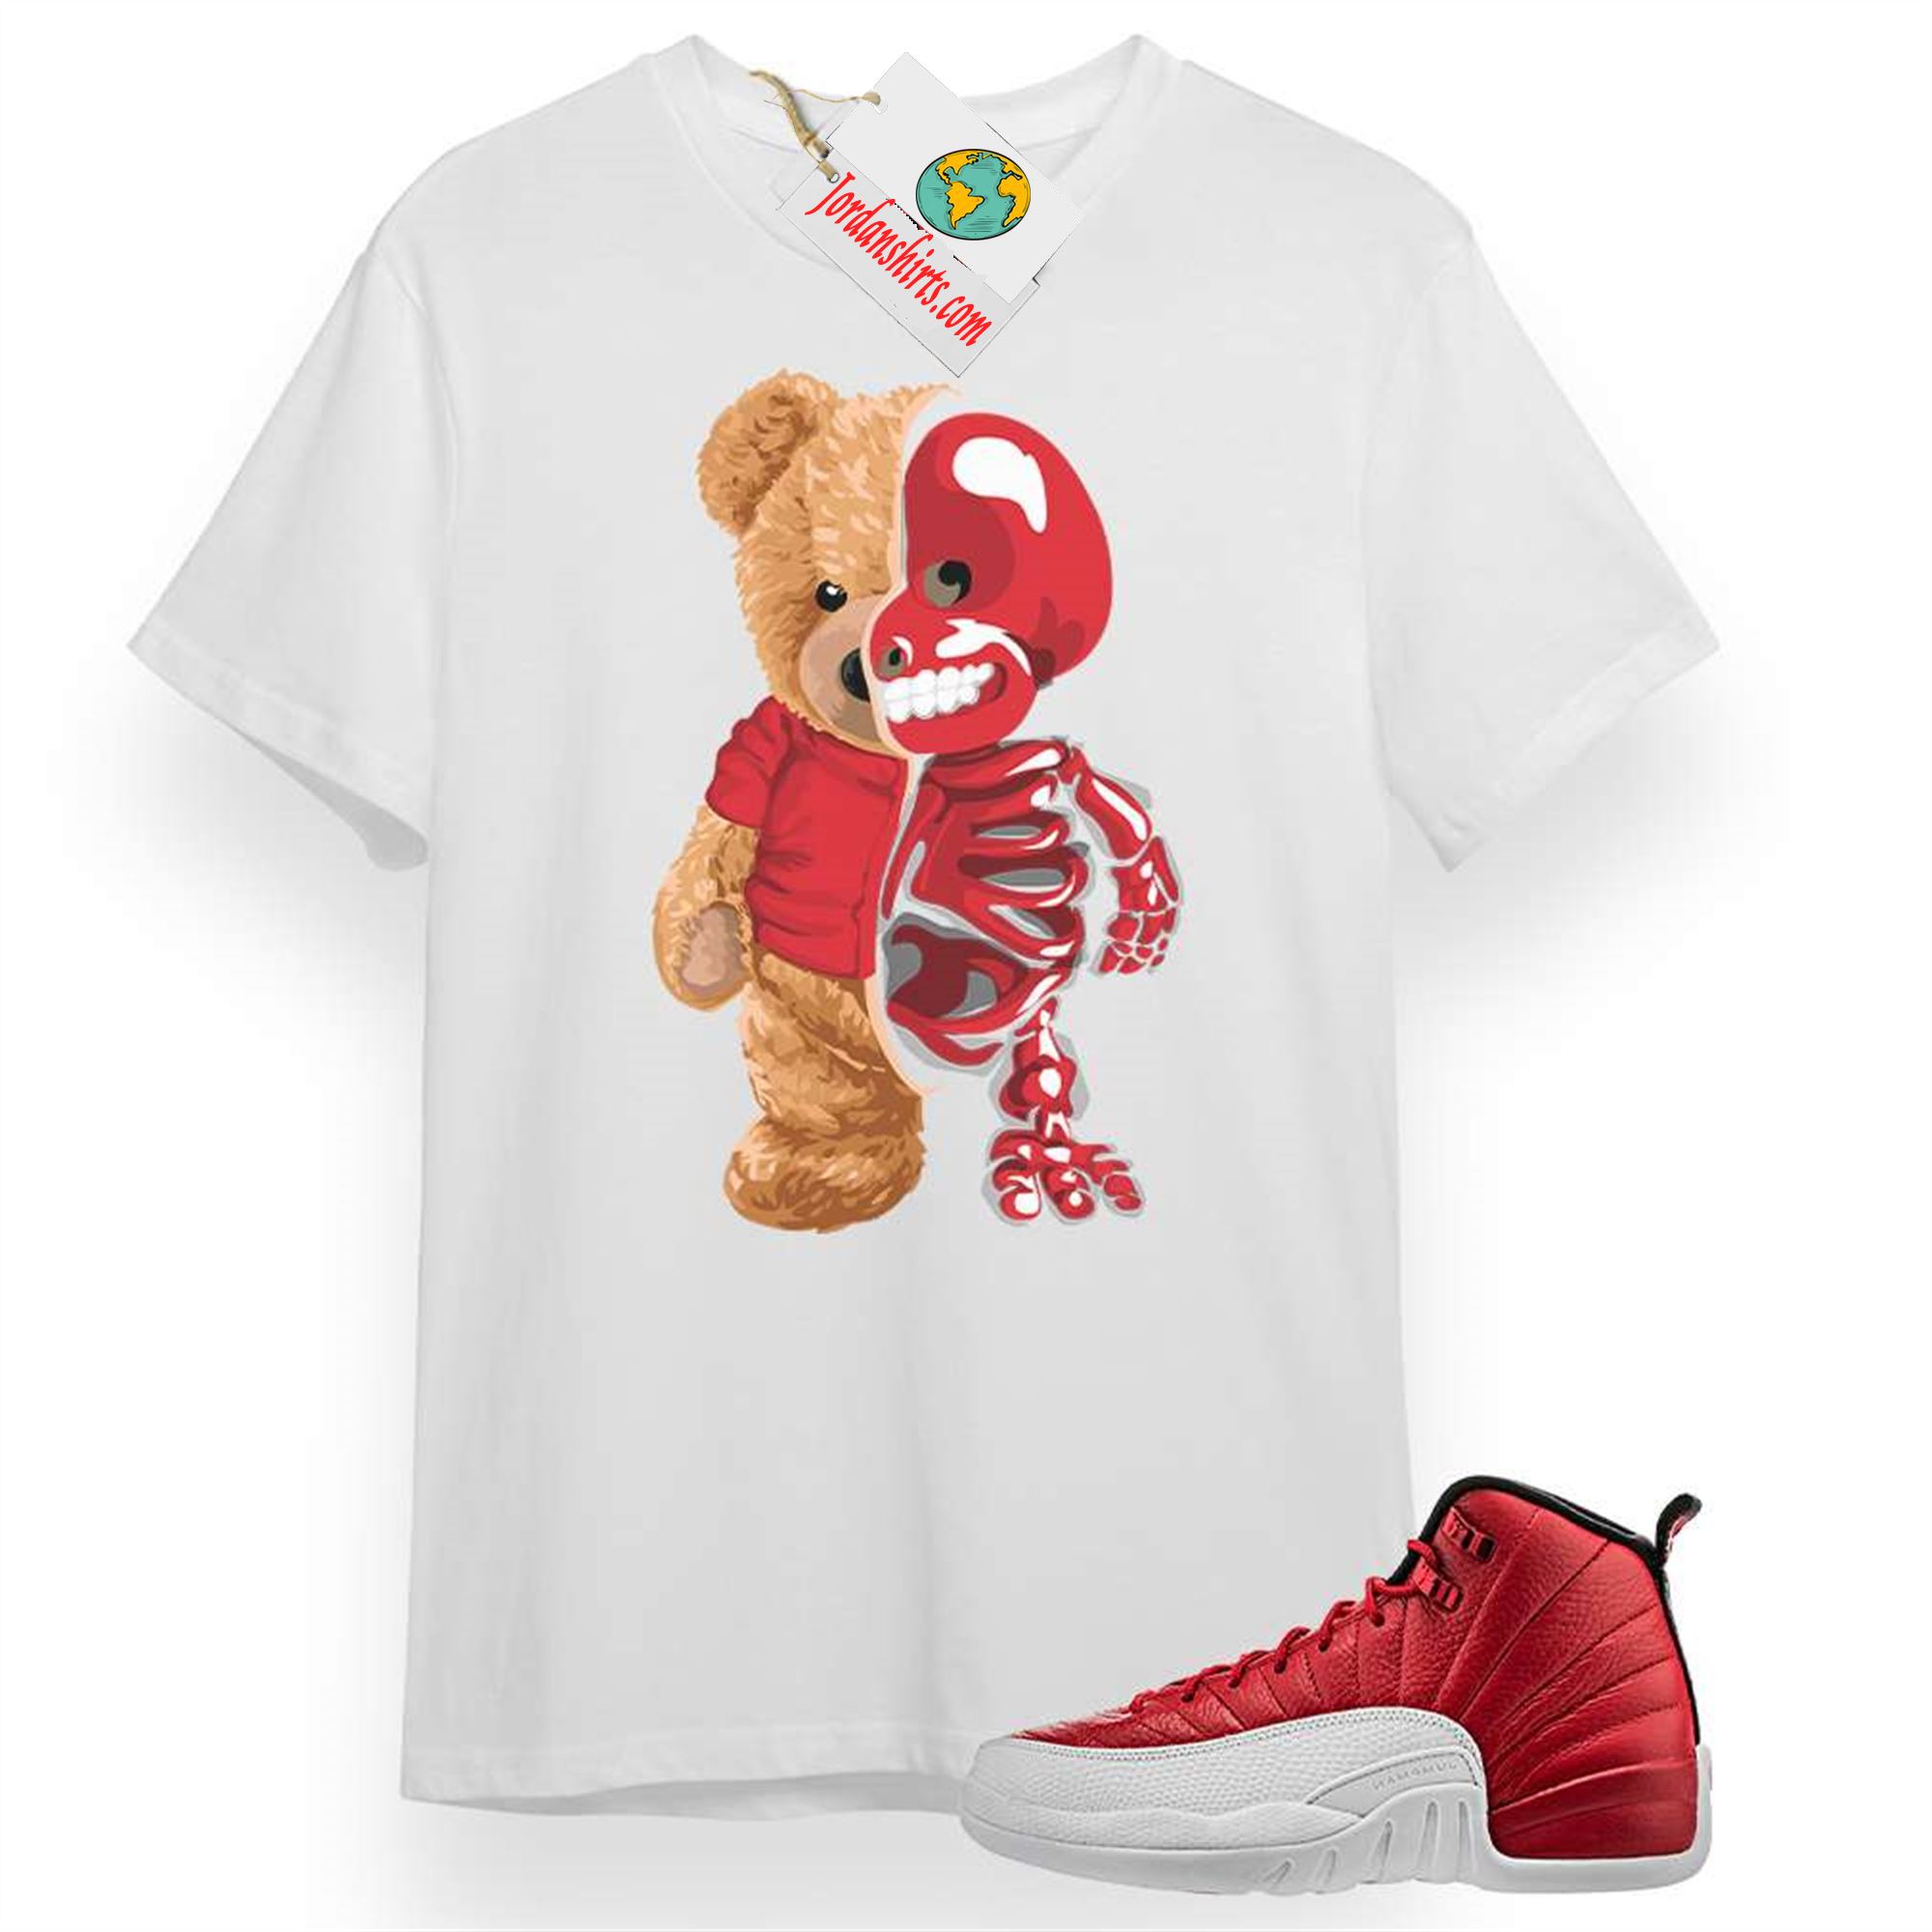 Jordan 12 Shirt, Teddy Bear Terminator White T-shirt Air Jordan 12 Gym Red 12s Full Size Up To 5xl